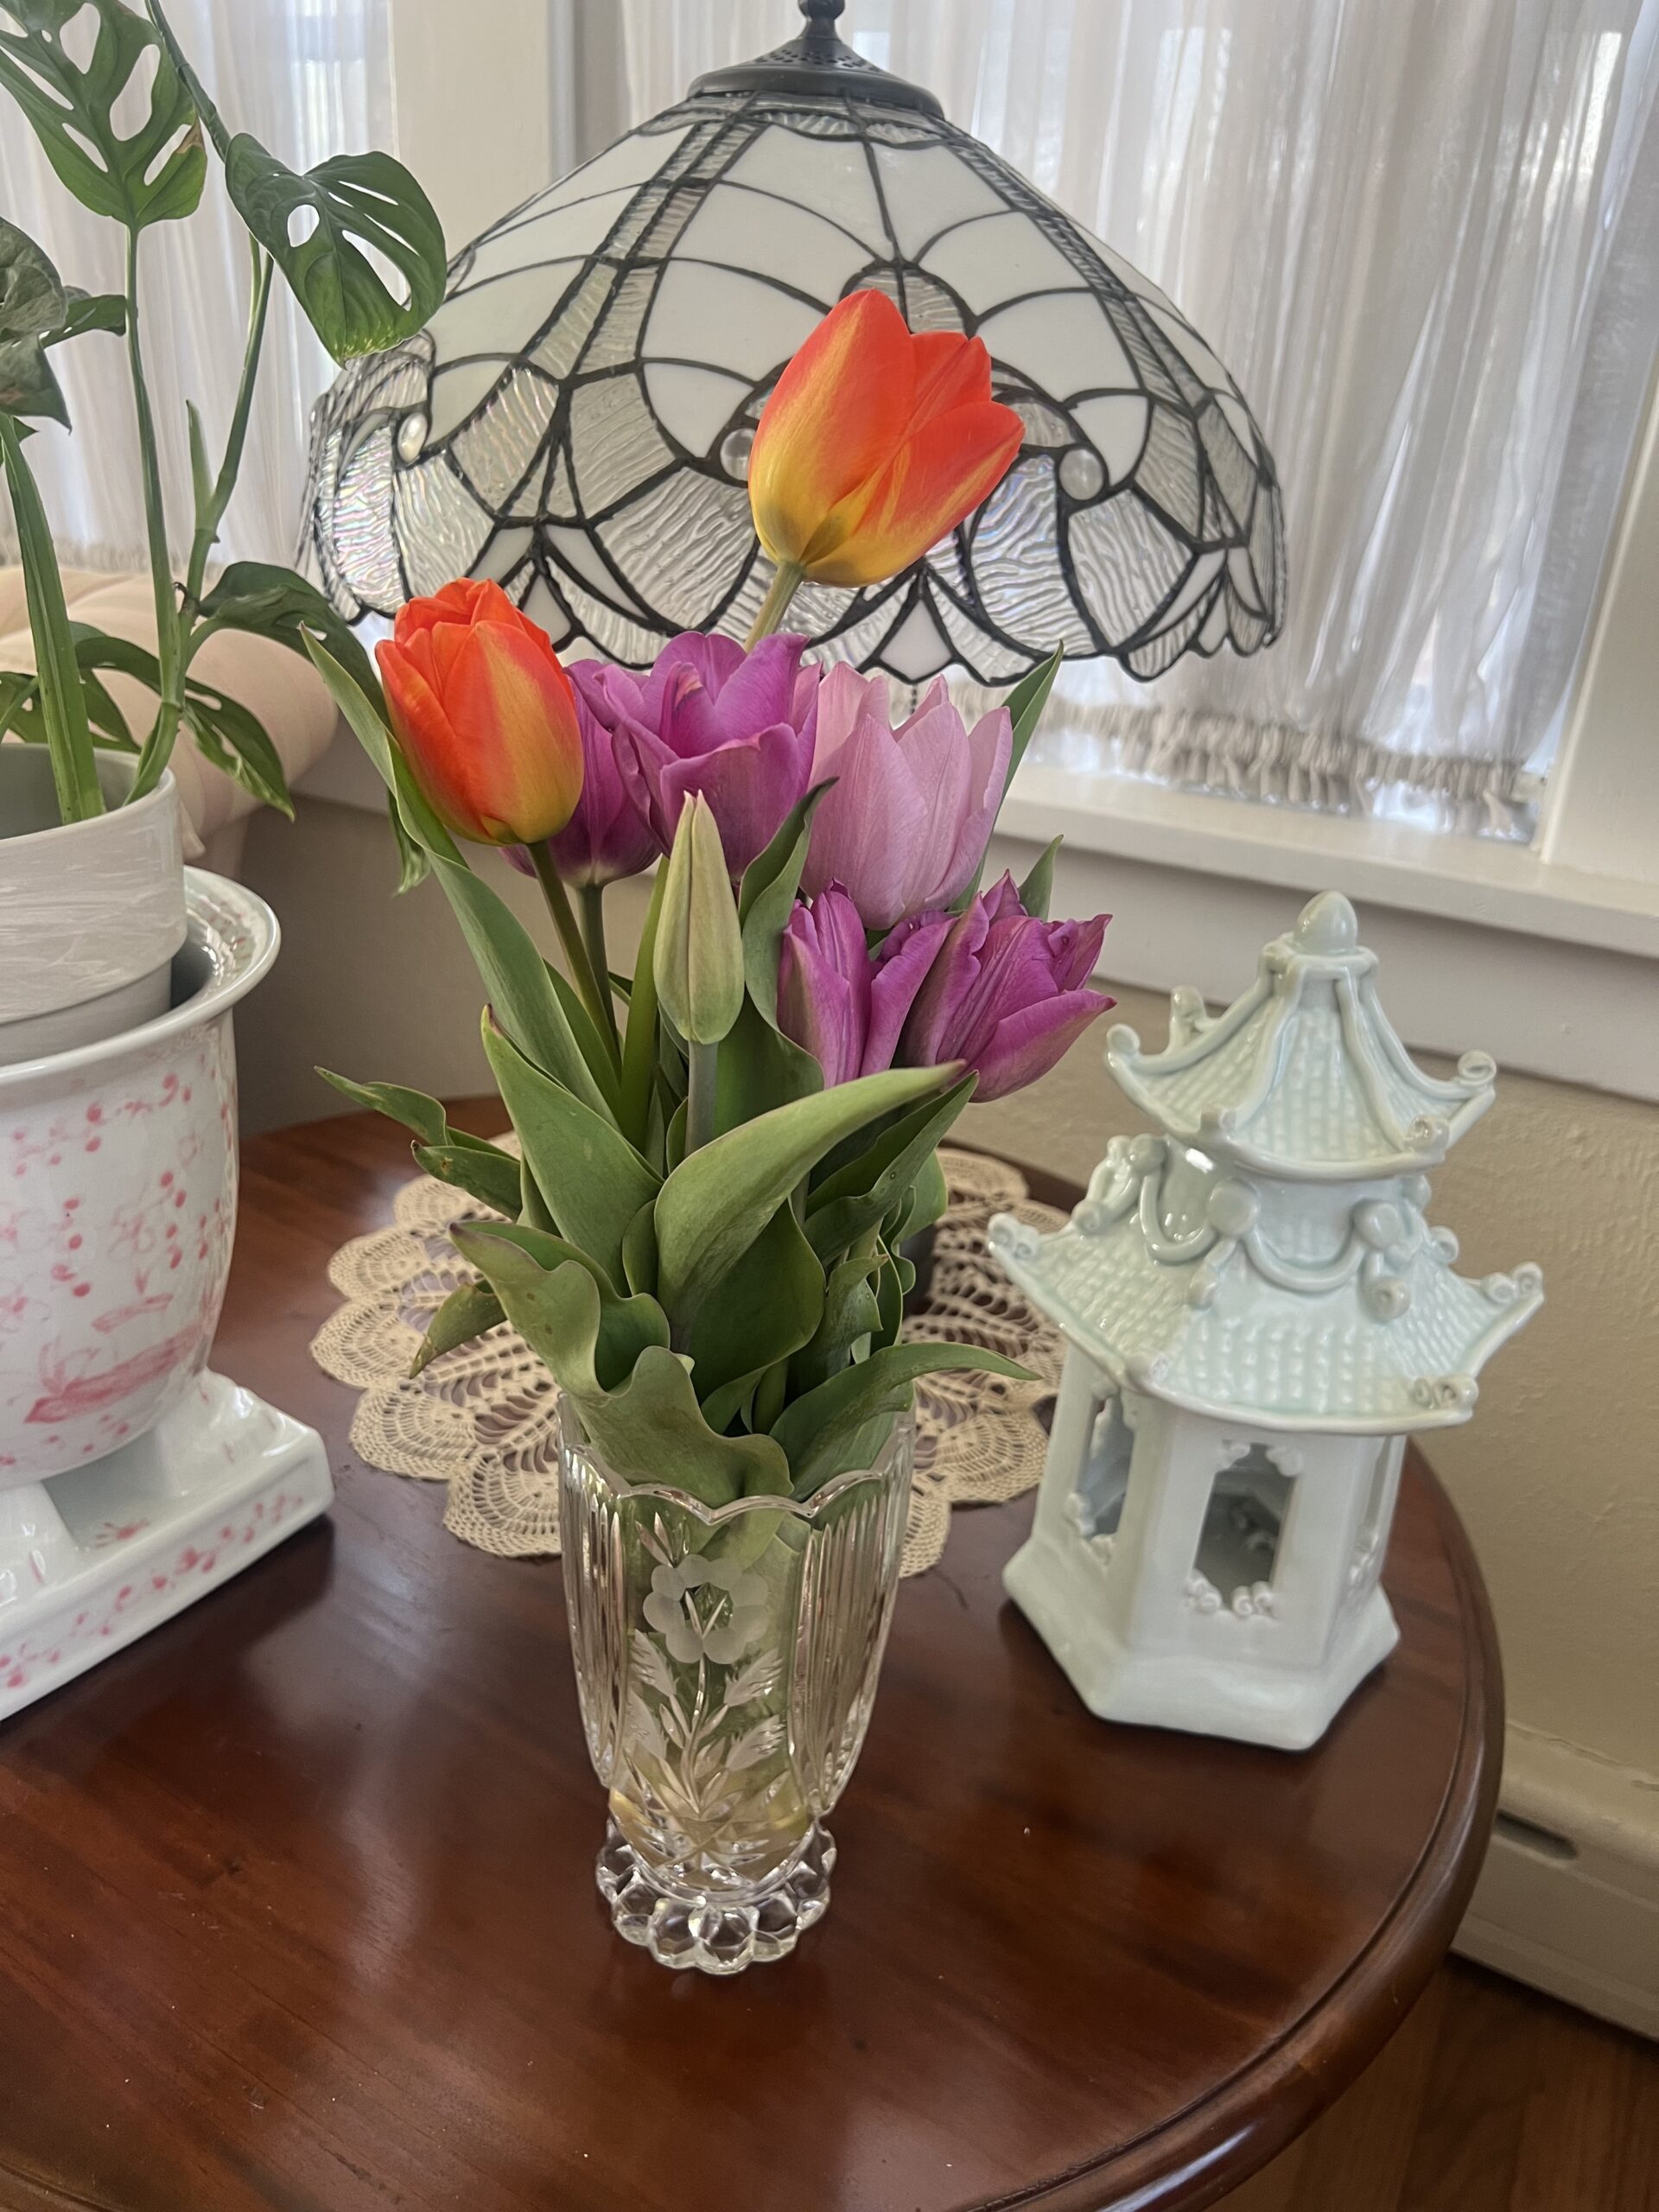 My U-Pick Tulips from Holland Ridge Farm